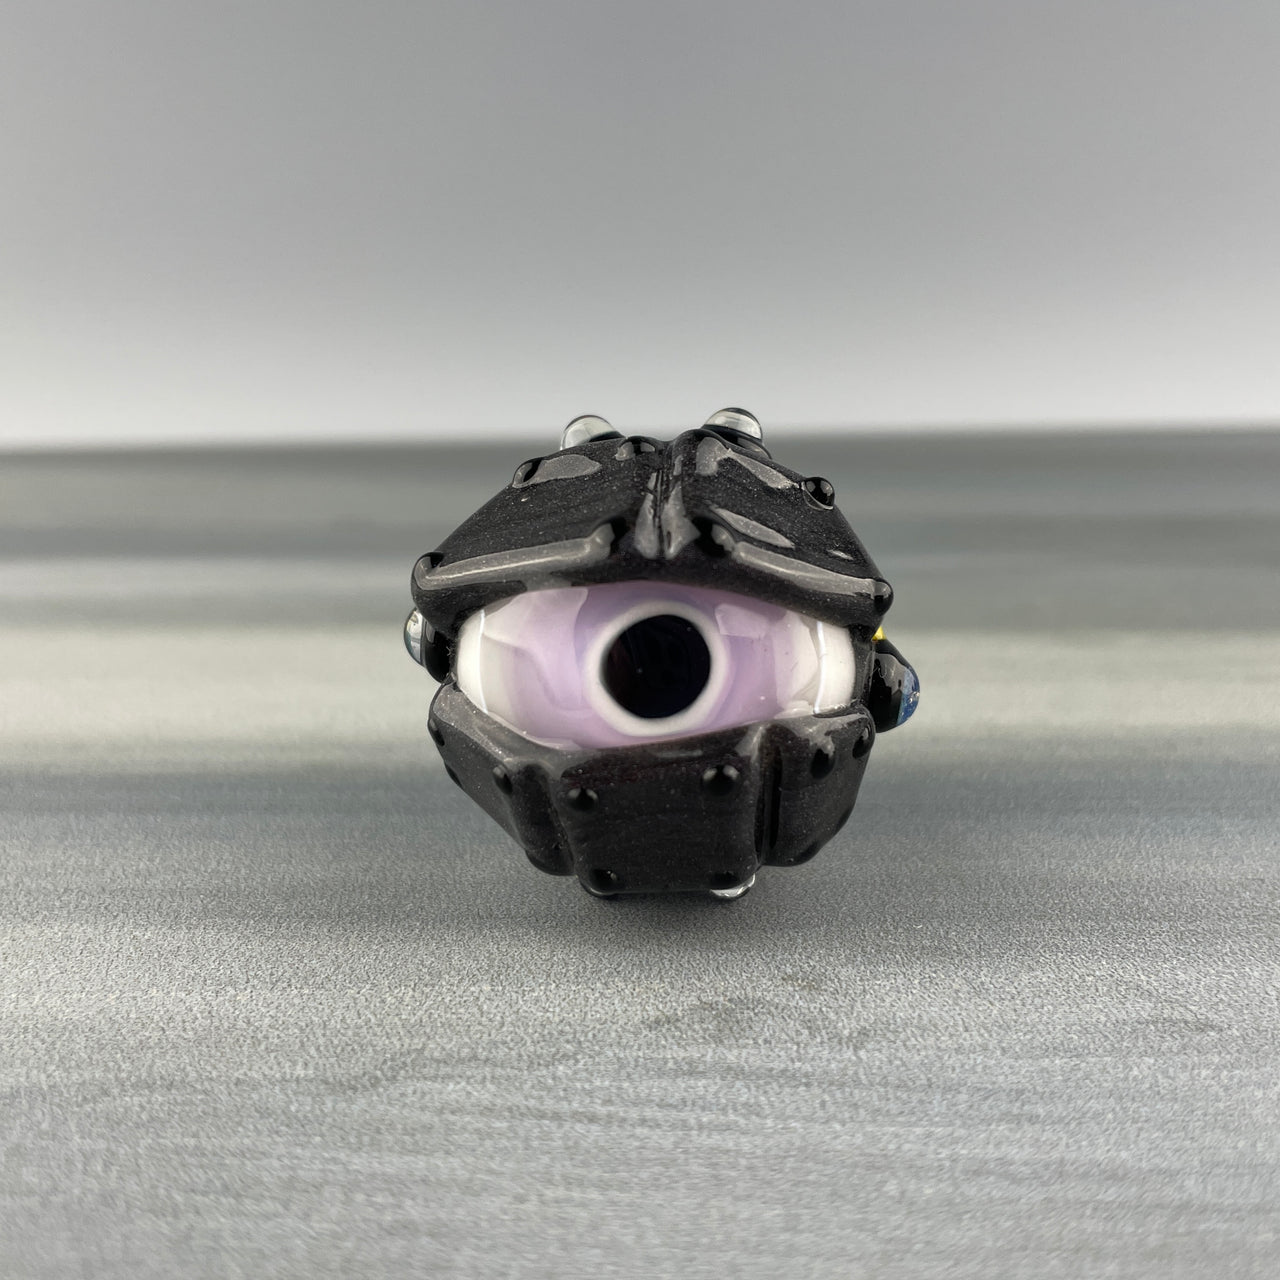 robo glass eyeball marble